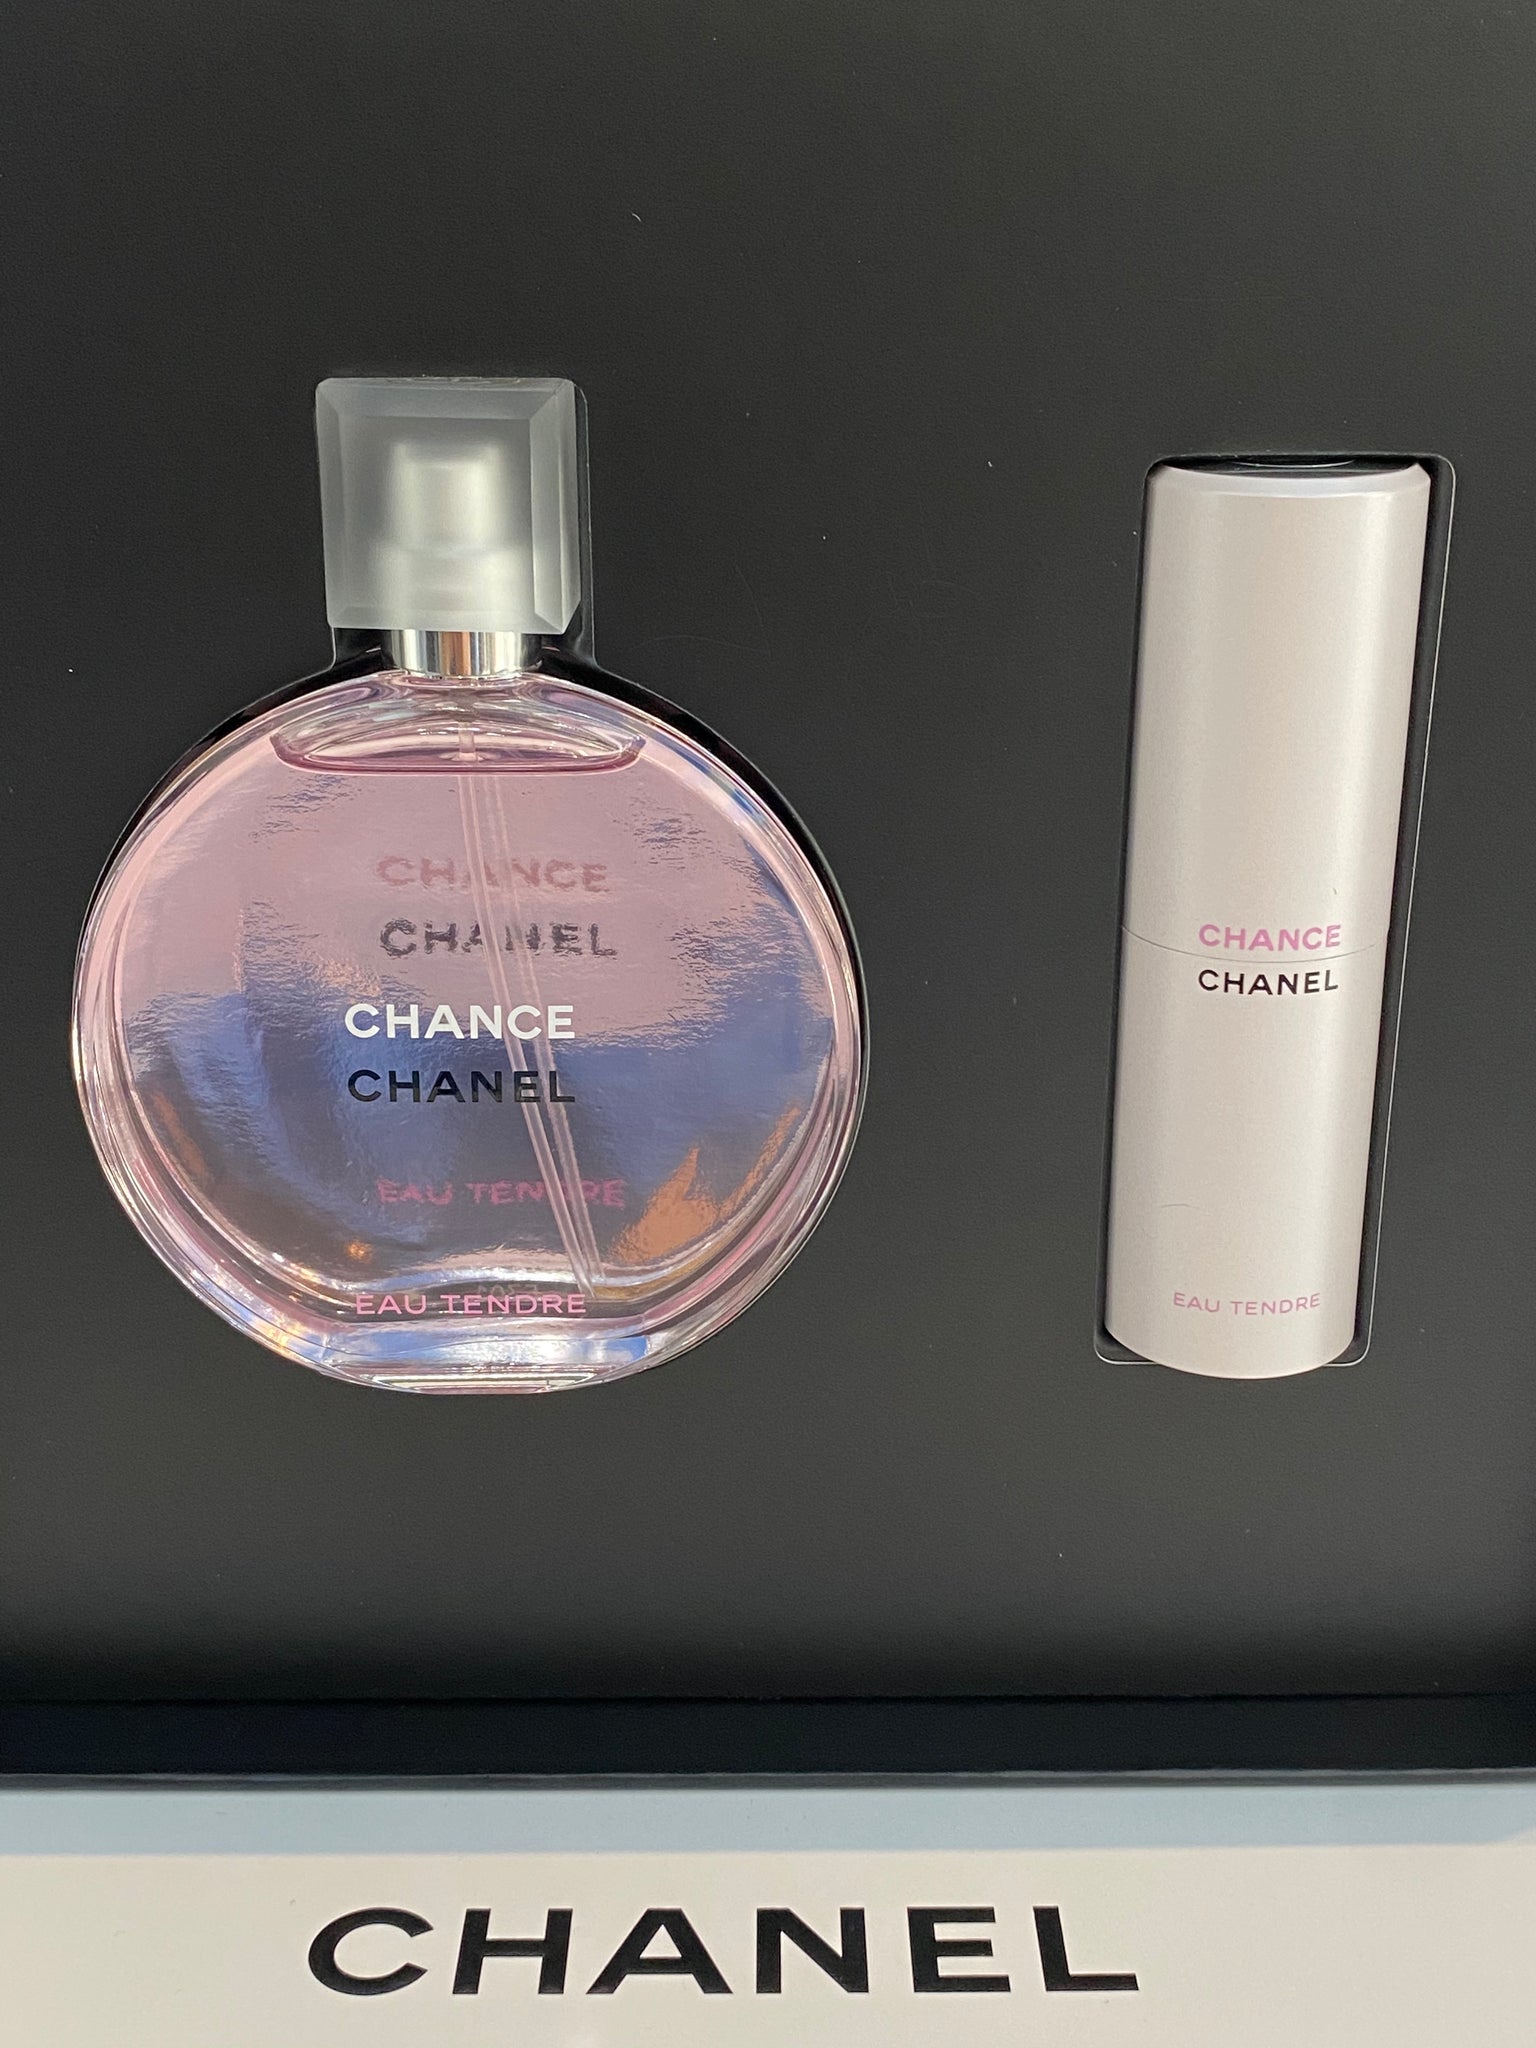 Chanel Chance mini perfume set ✨